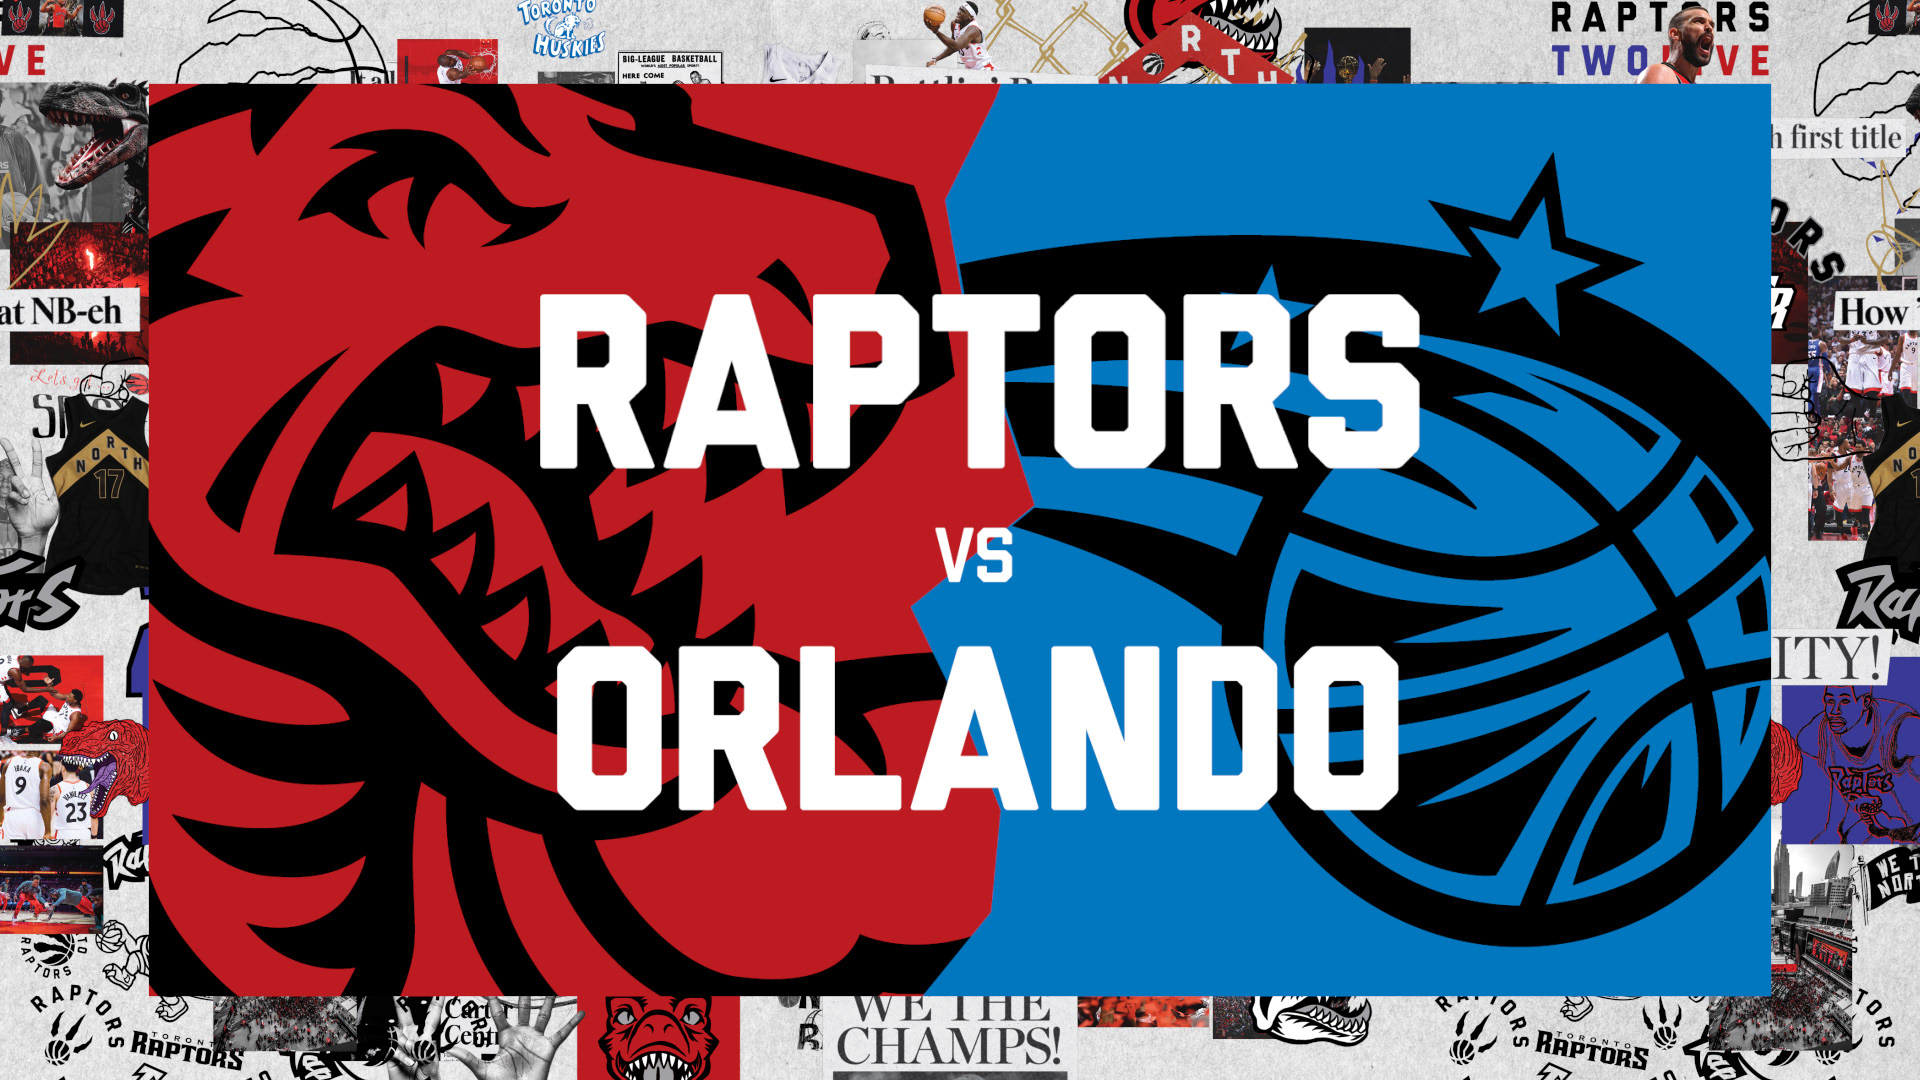 Toronto Raptors - 19\/20 Season reel on Behanceaaaded92730557.5e530092b0369.jpg